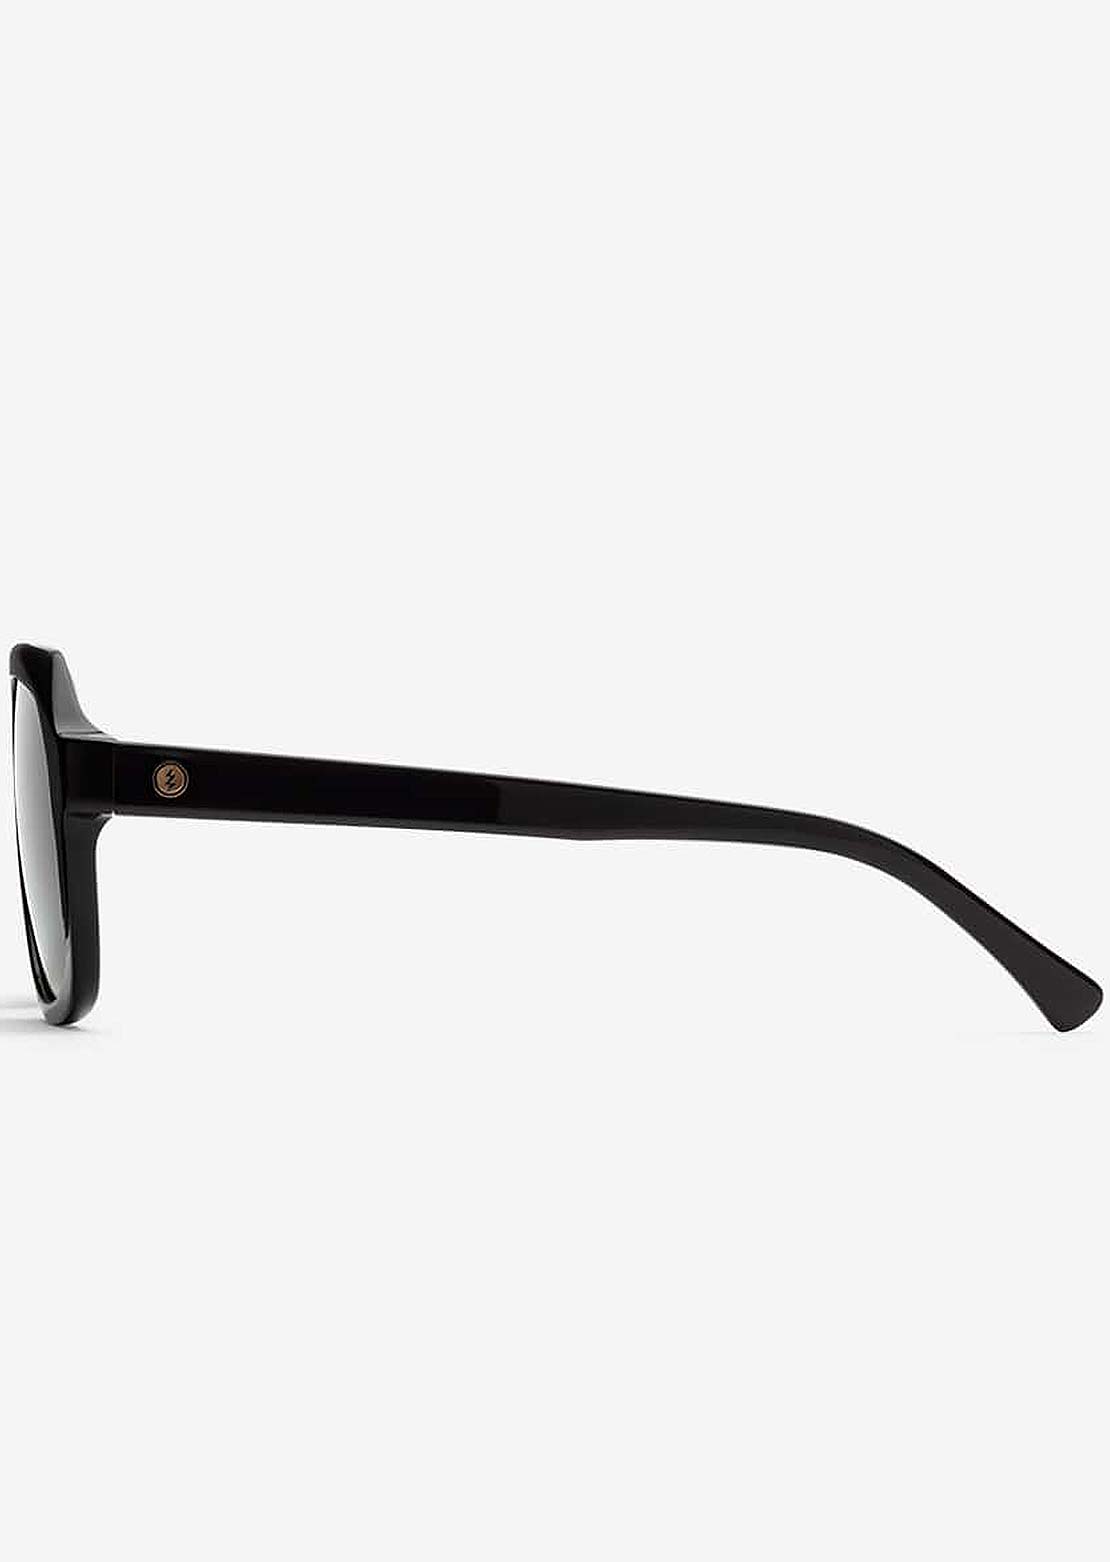 Electric Augusta Sunglasses Gloss Black/Grey Polarized